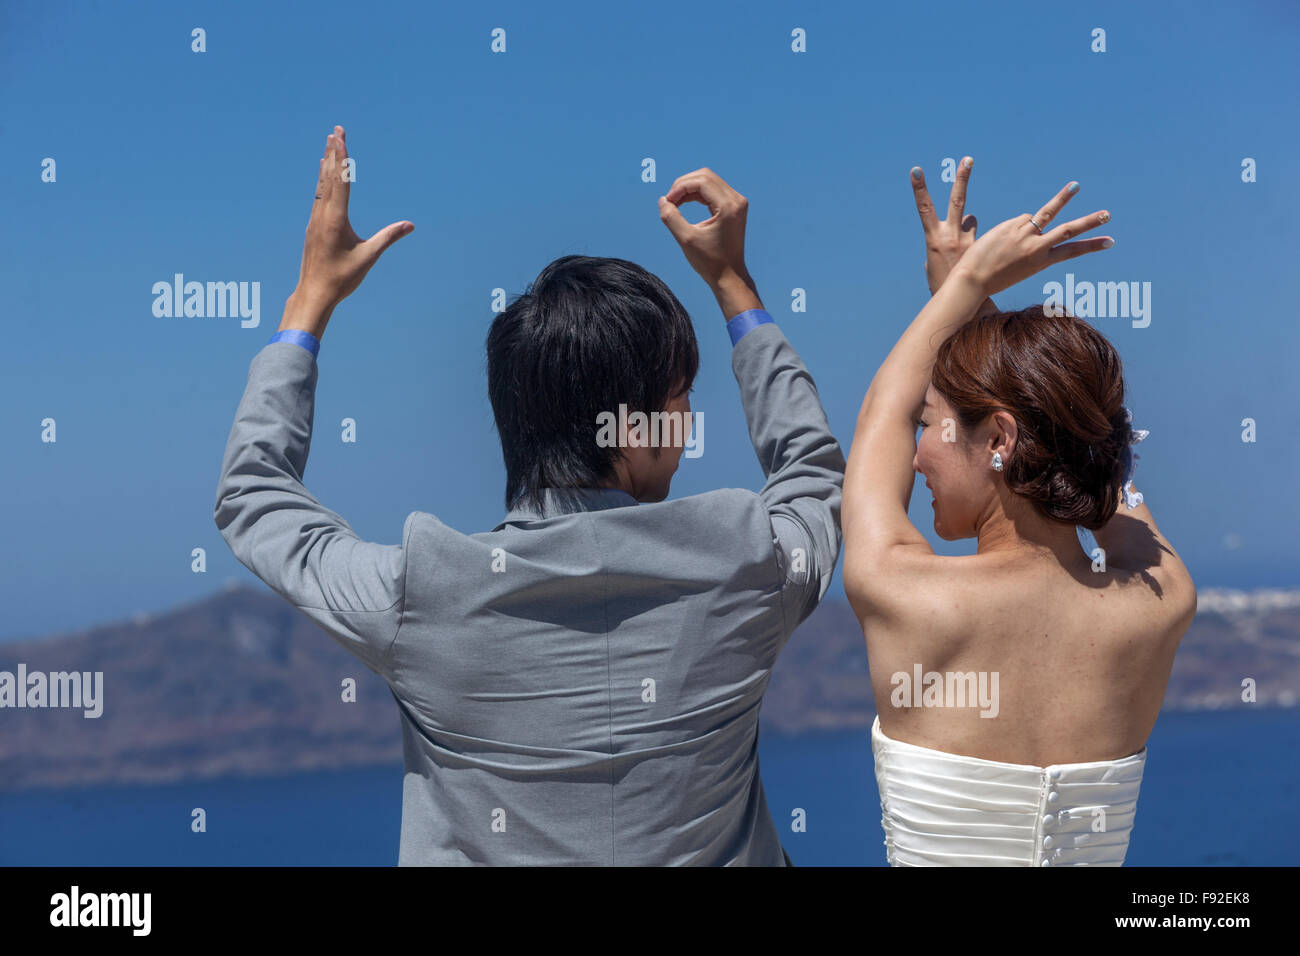 Inschrift Liebe, asiatische Menschen gerade geheiratet, Santorini Paar hinten, griechische Insel, Griechenland Stockfoto